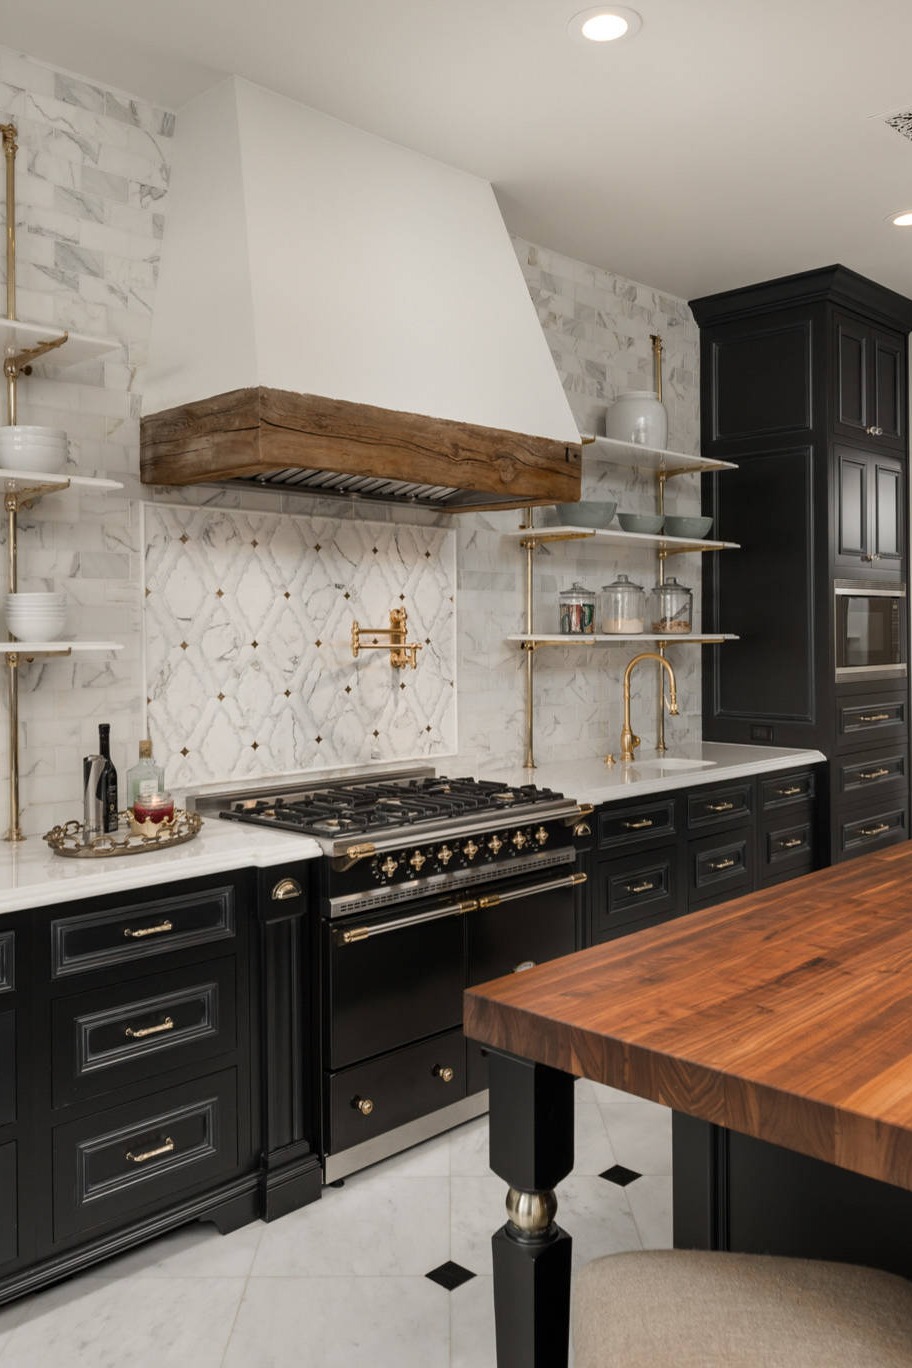 White Backsplash Wood Floors Brass Hardware Open Shelves Kitchen Design Cabinets